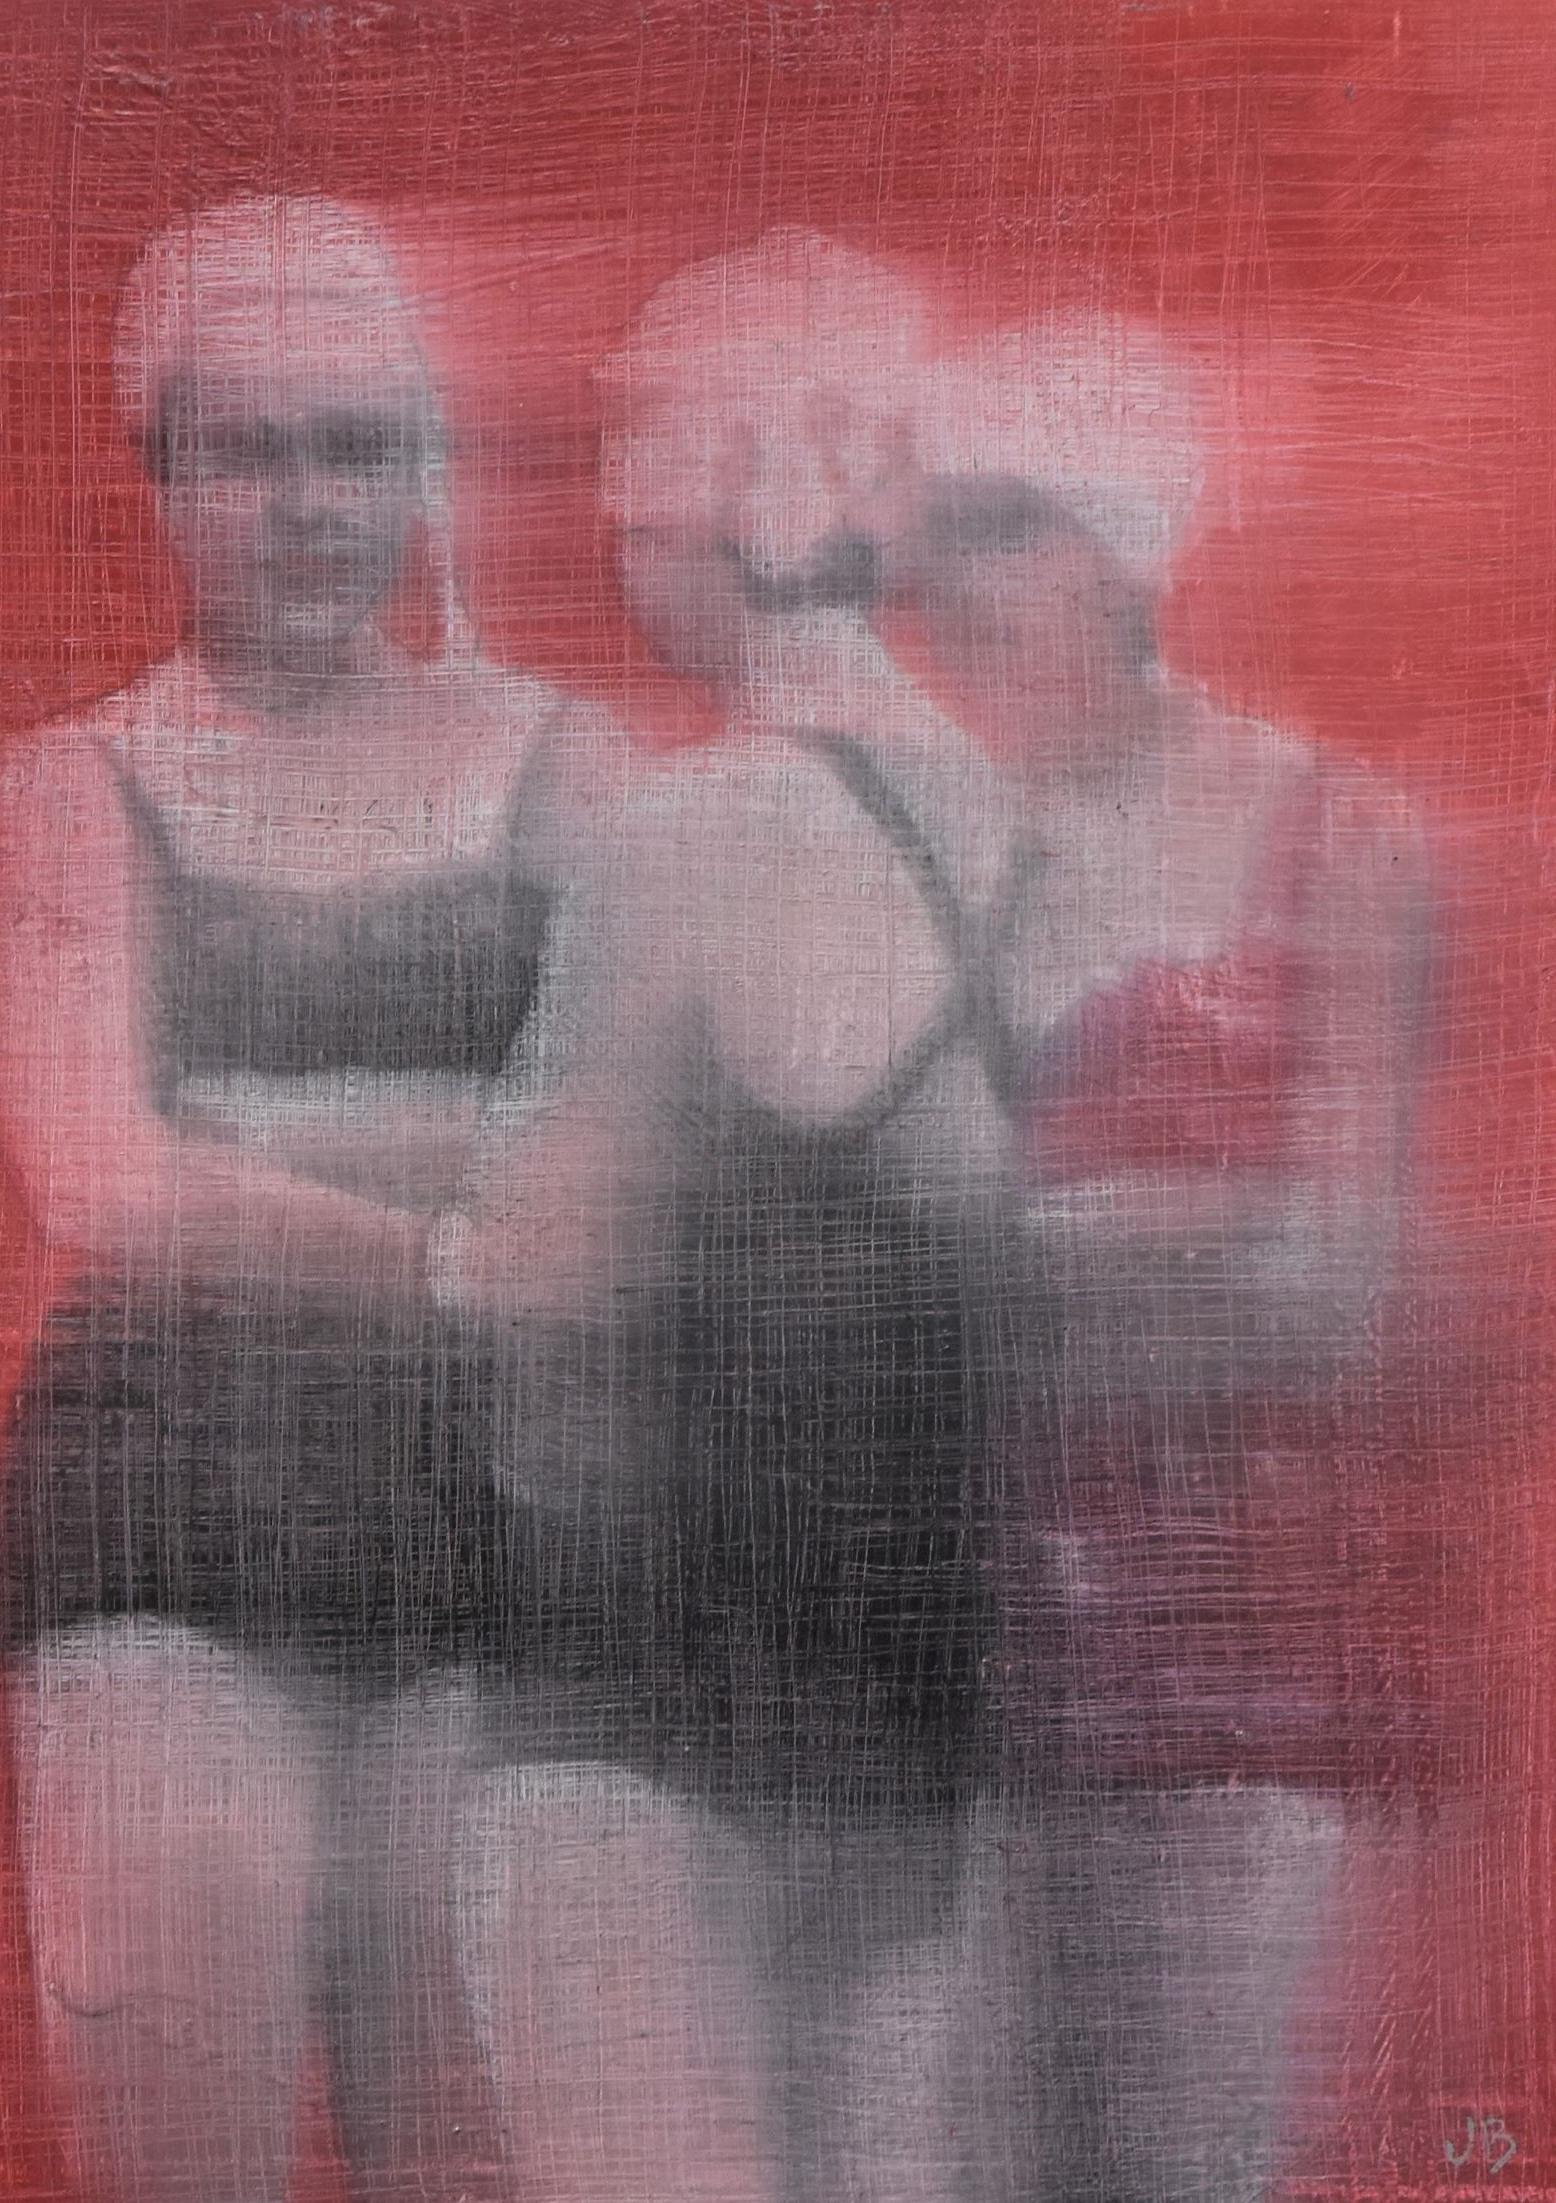 The Bathers I, Figurative, Texas artist, Women in the Arts, 9x12